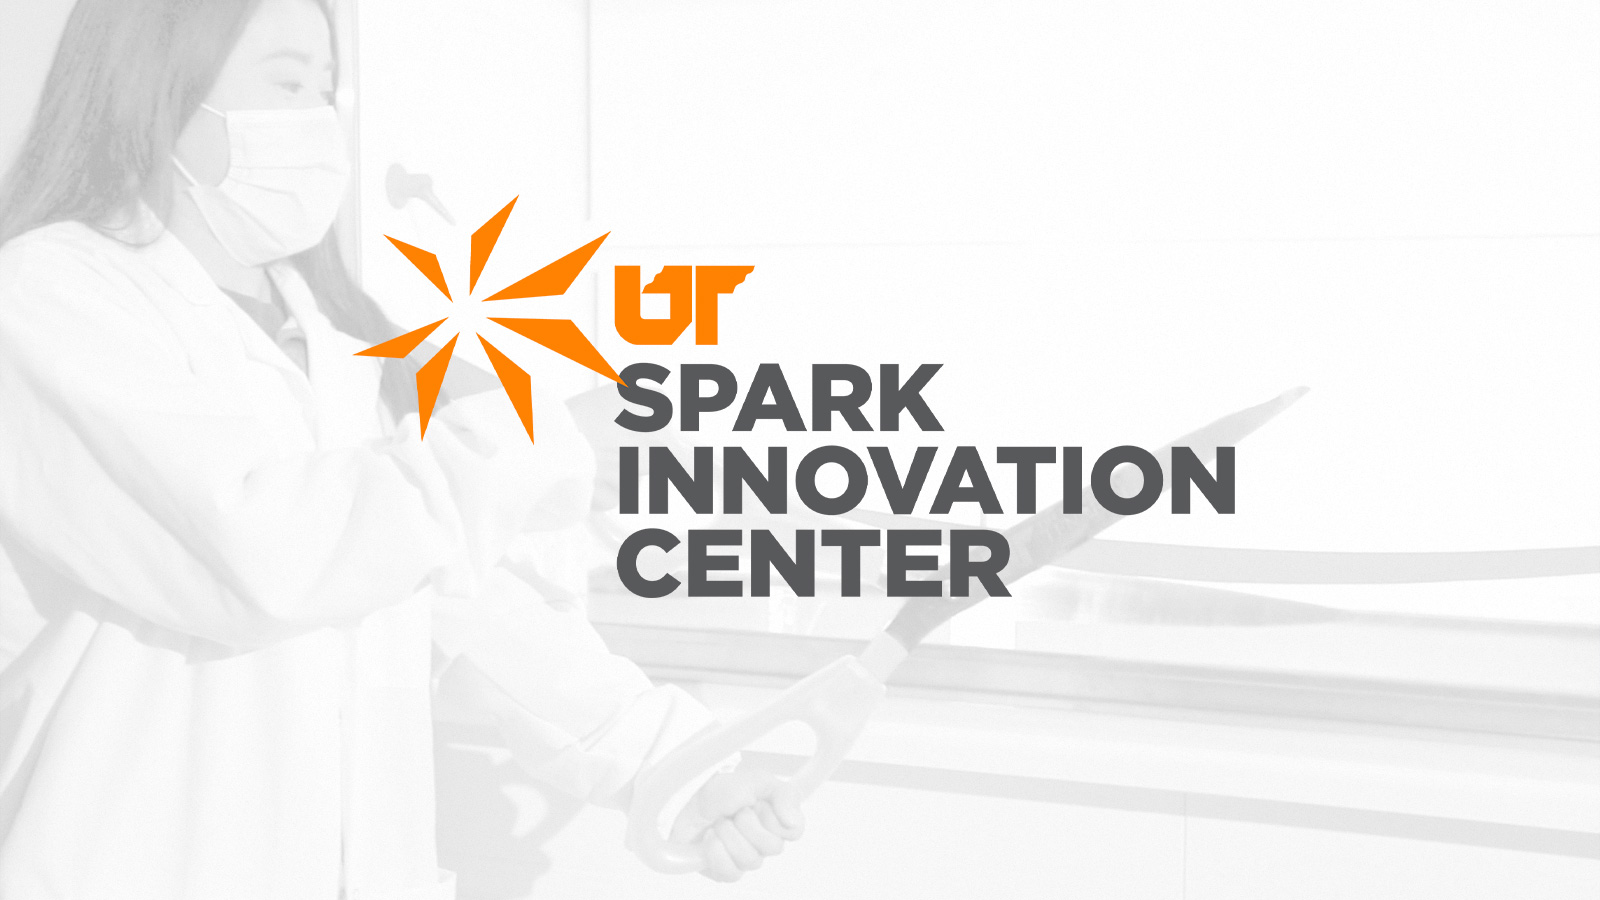 Spark Innovation Center